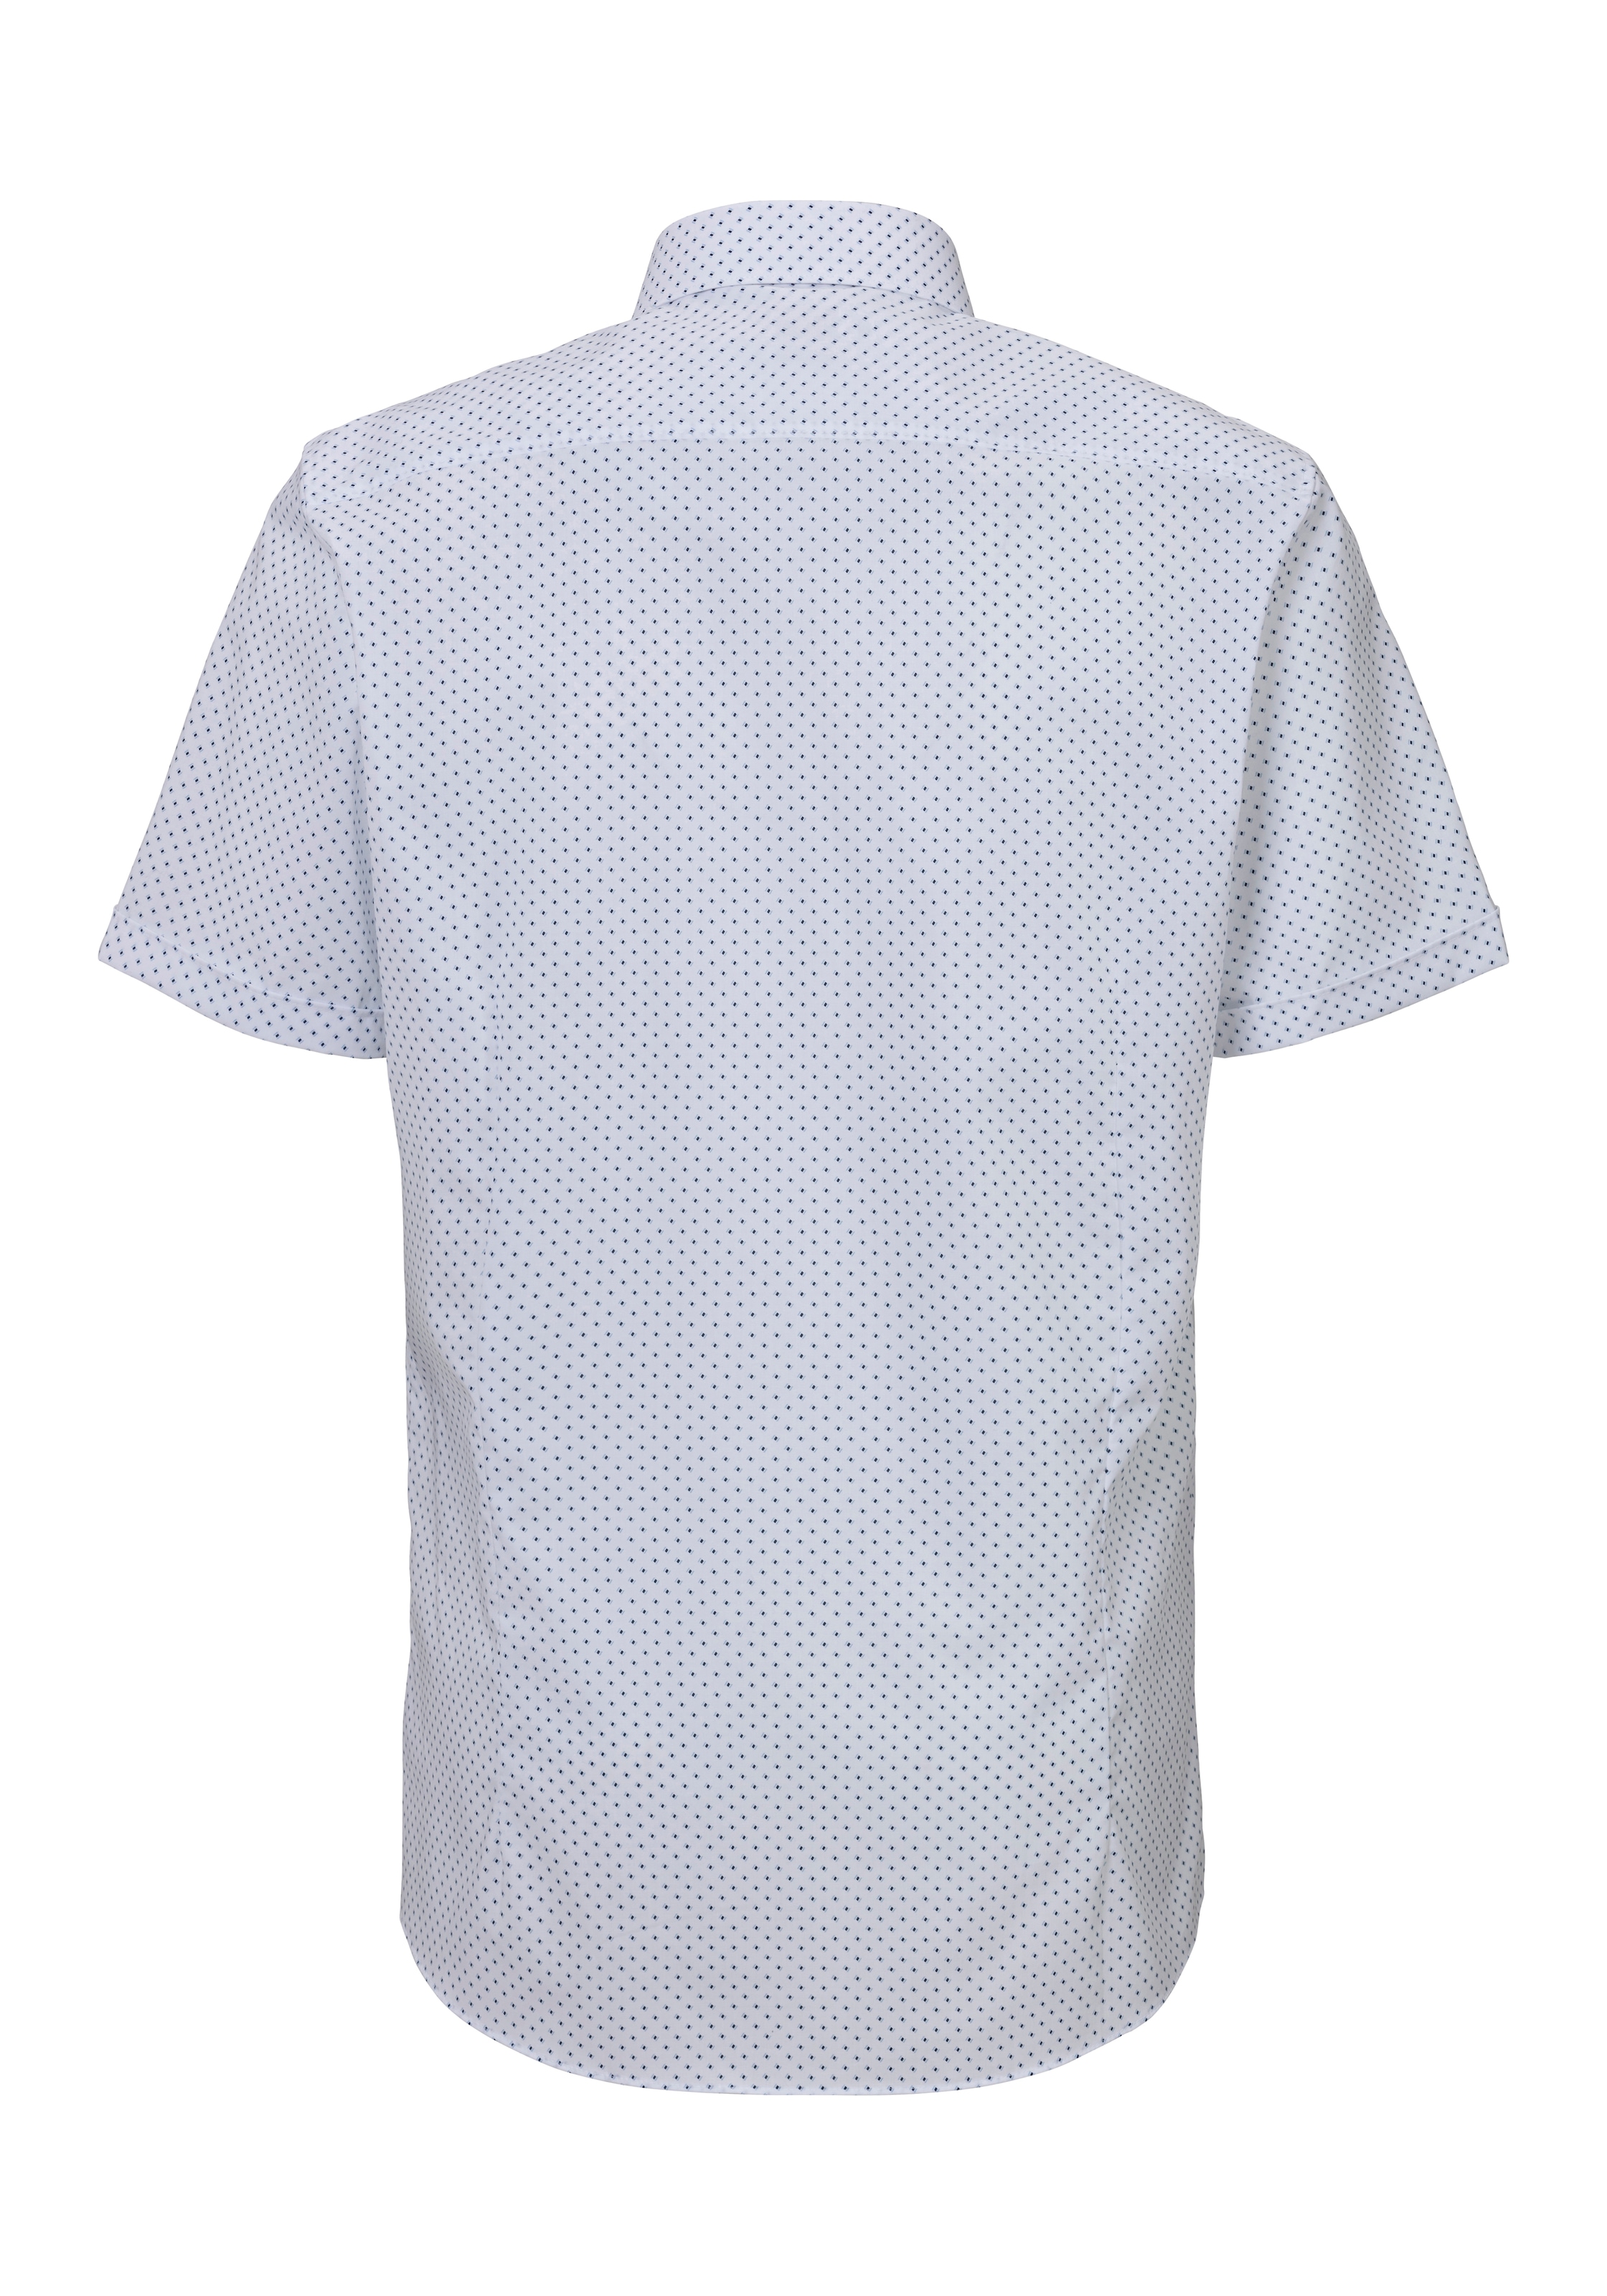 OLYMP Kurzarmhemd »Level 5 Five body fit«, mit modischem Muster